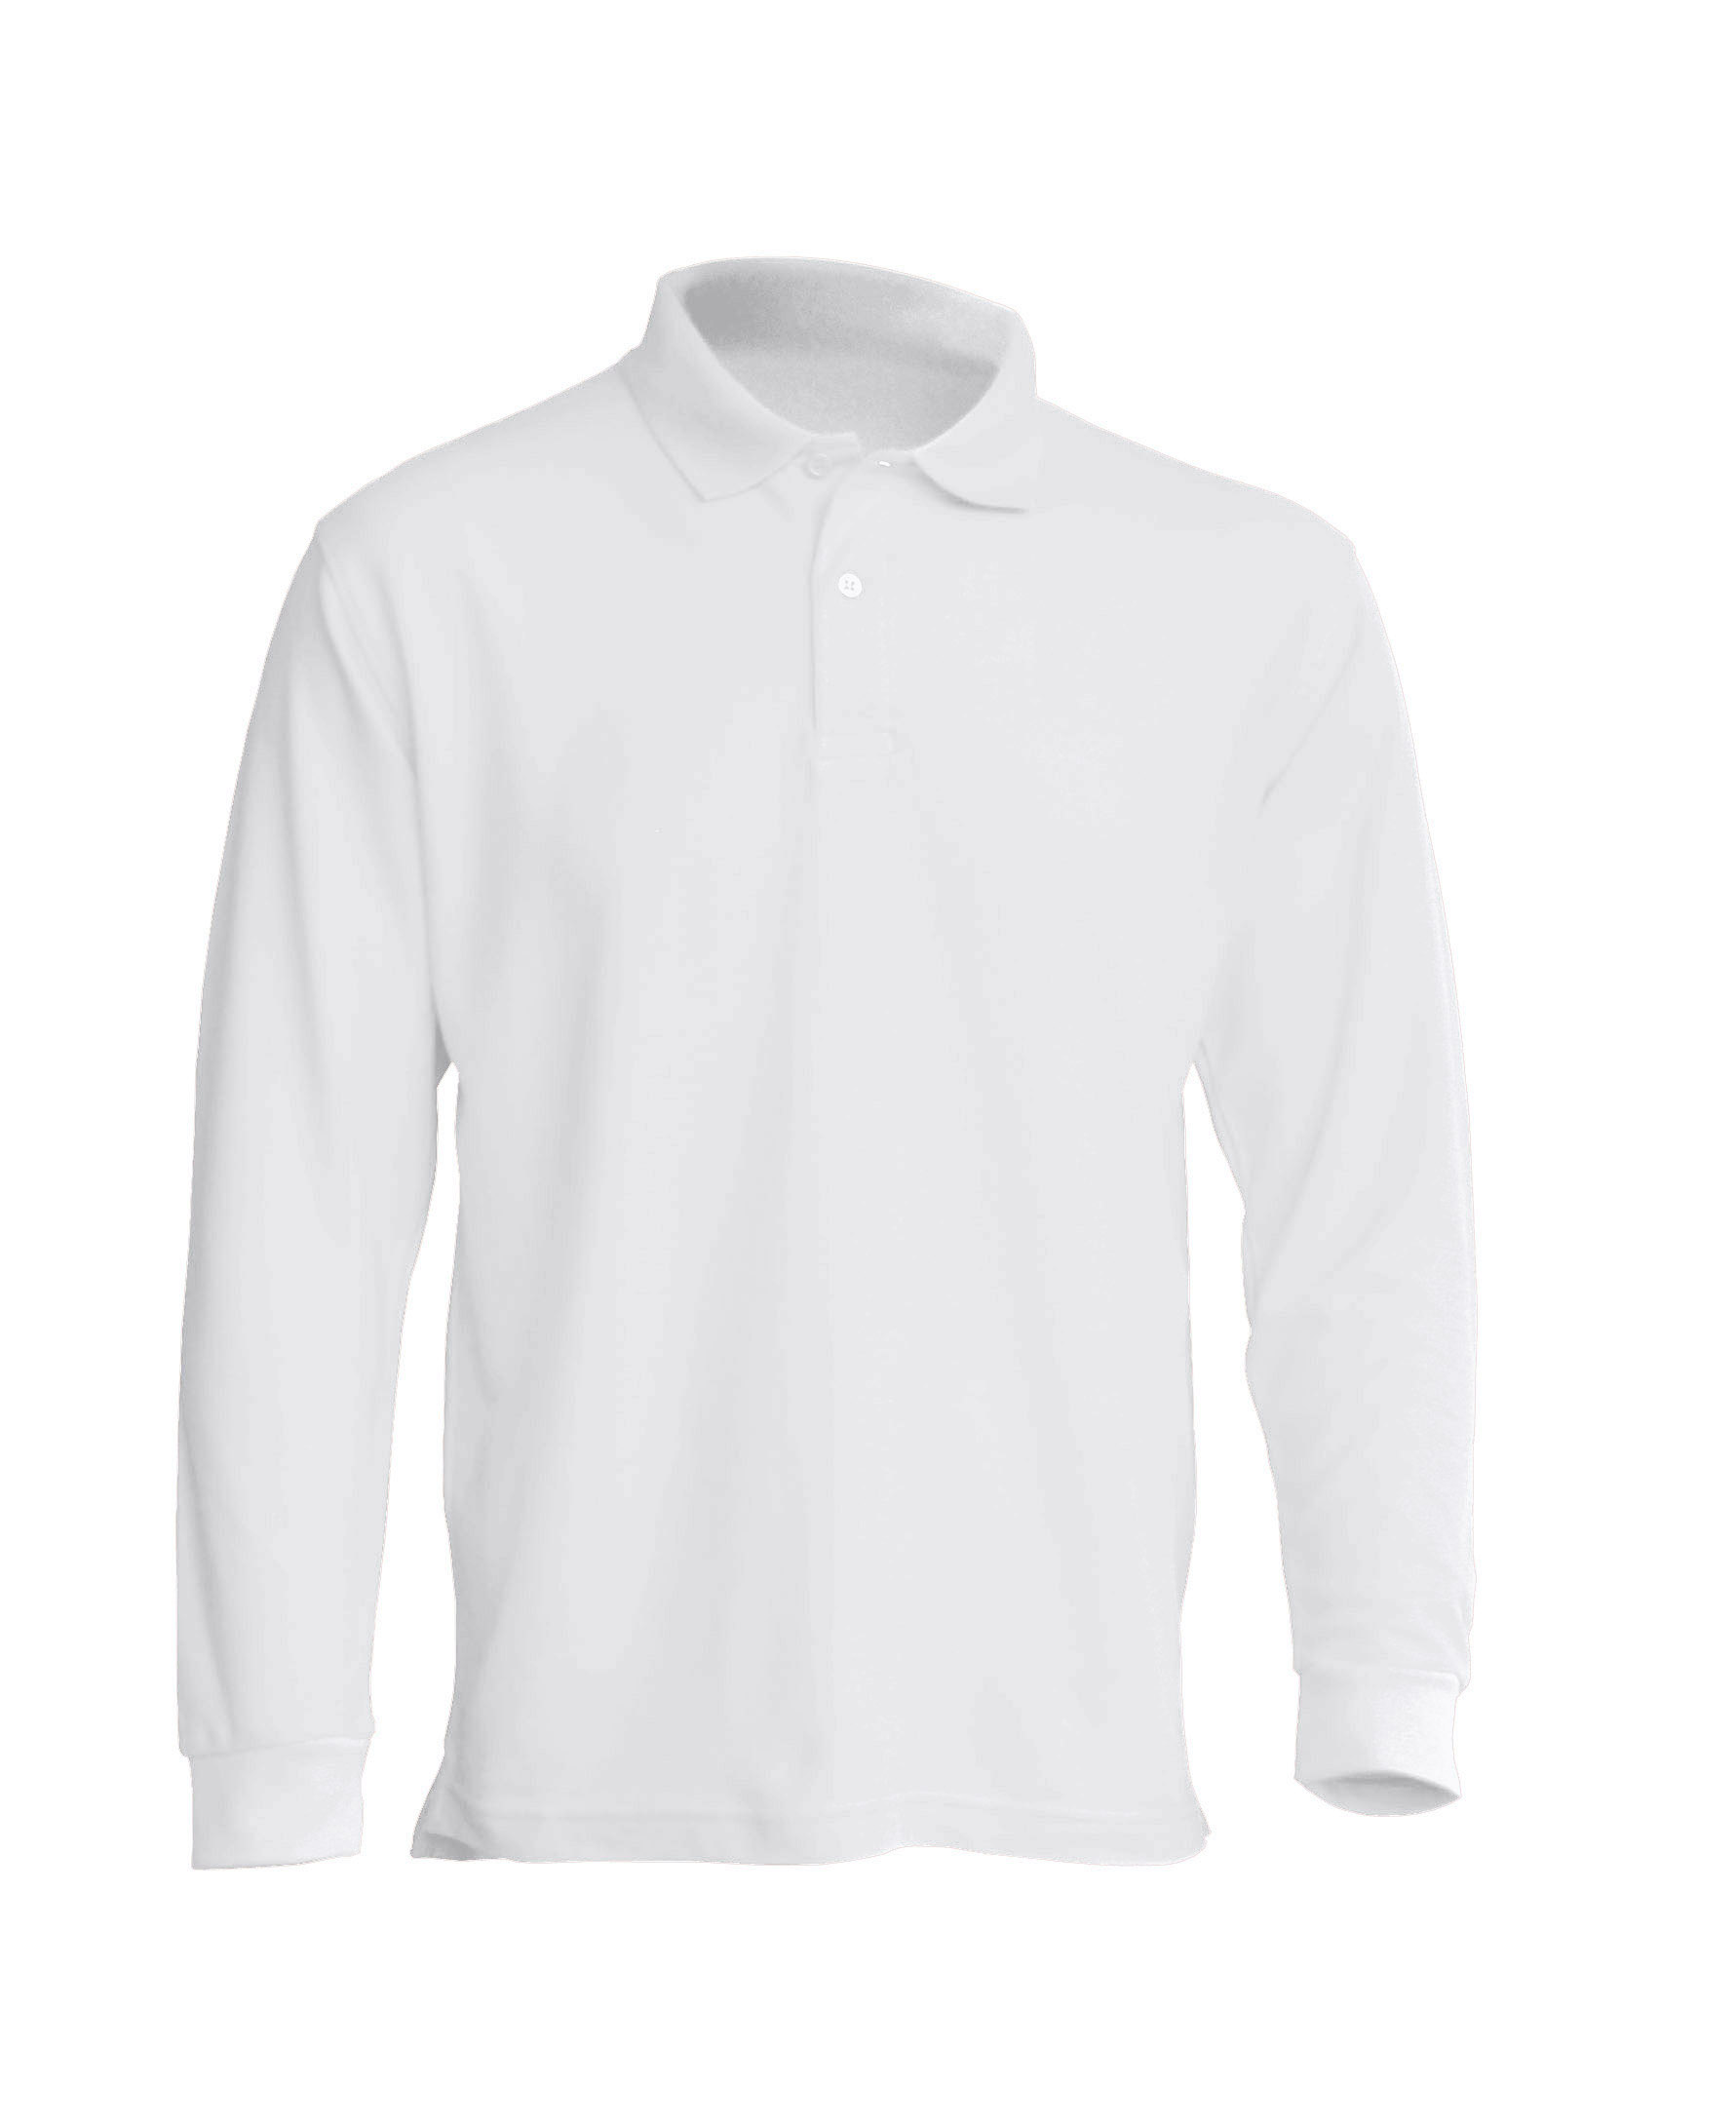 white polo long sleeve t shirt